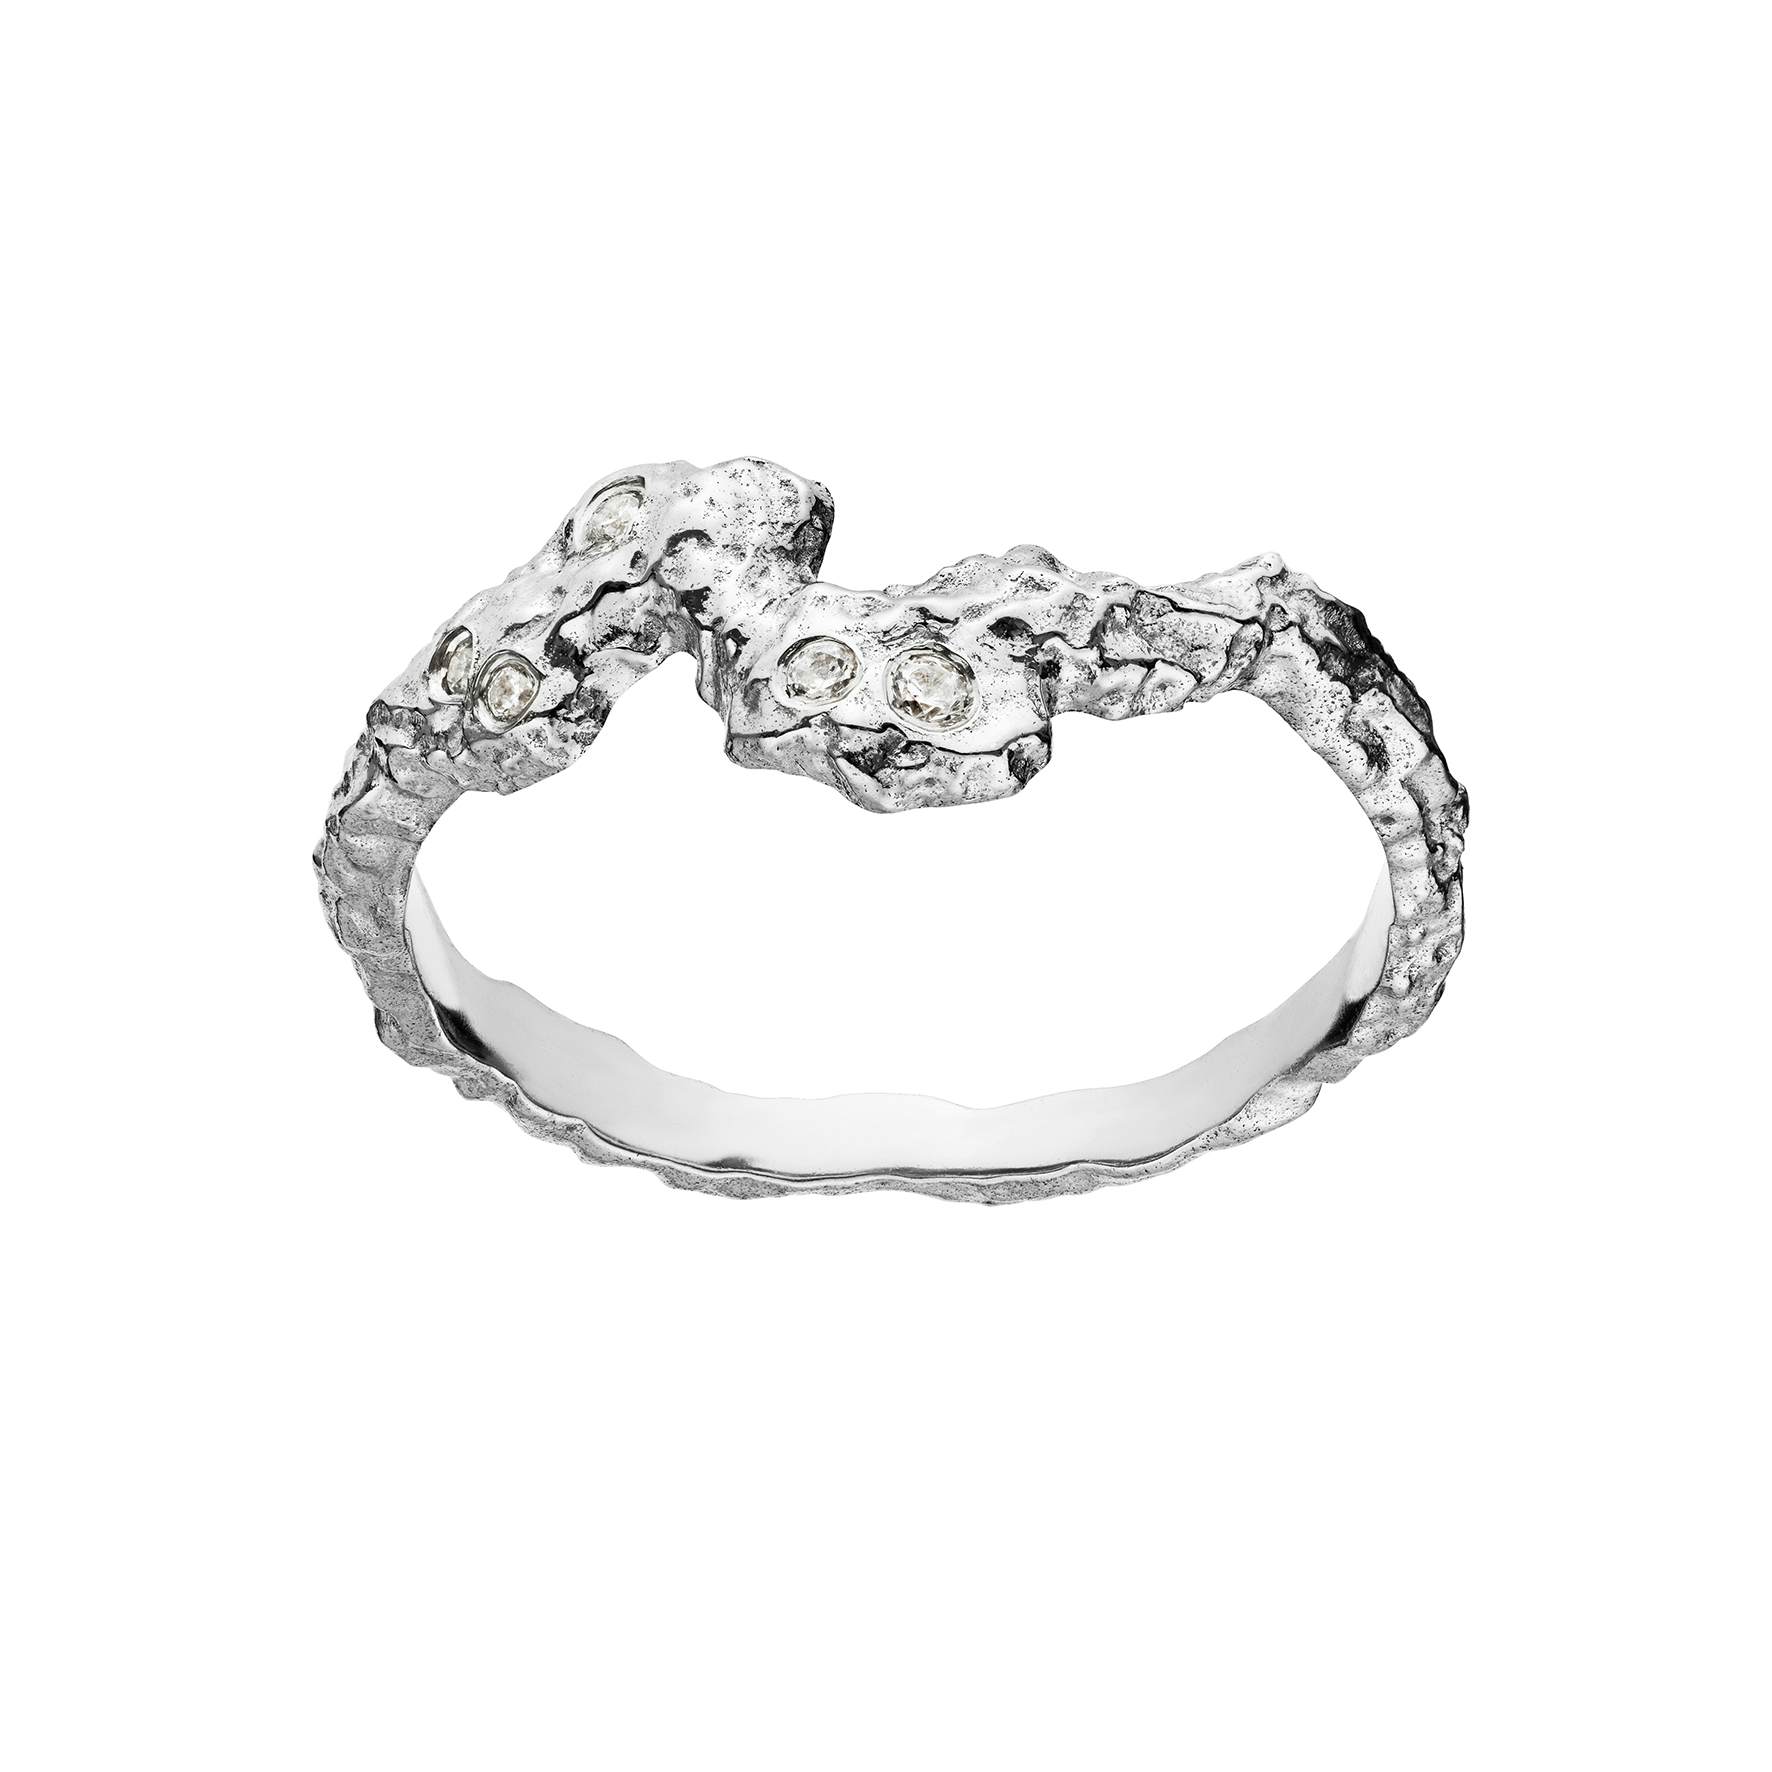 Frida Ring from Maanesten in Silver Sterling 925